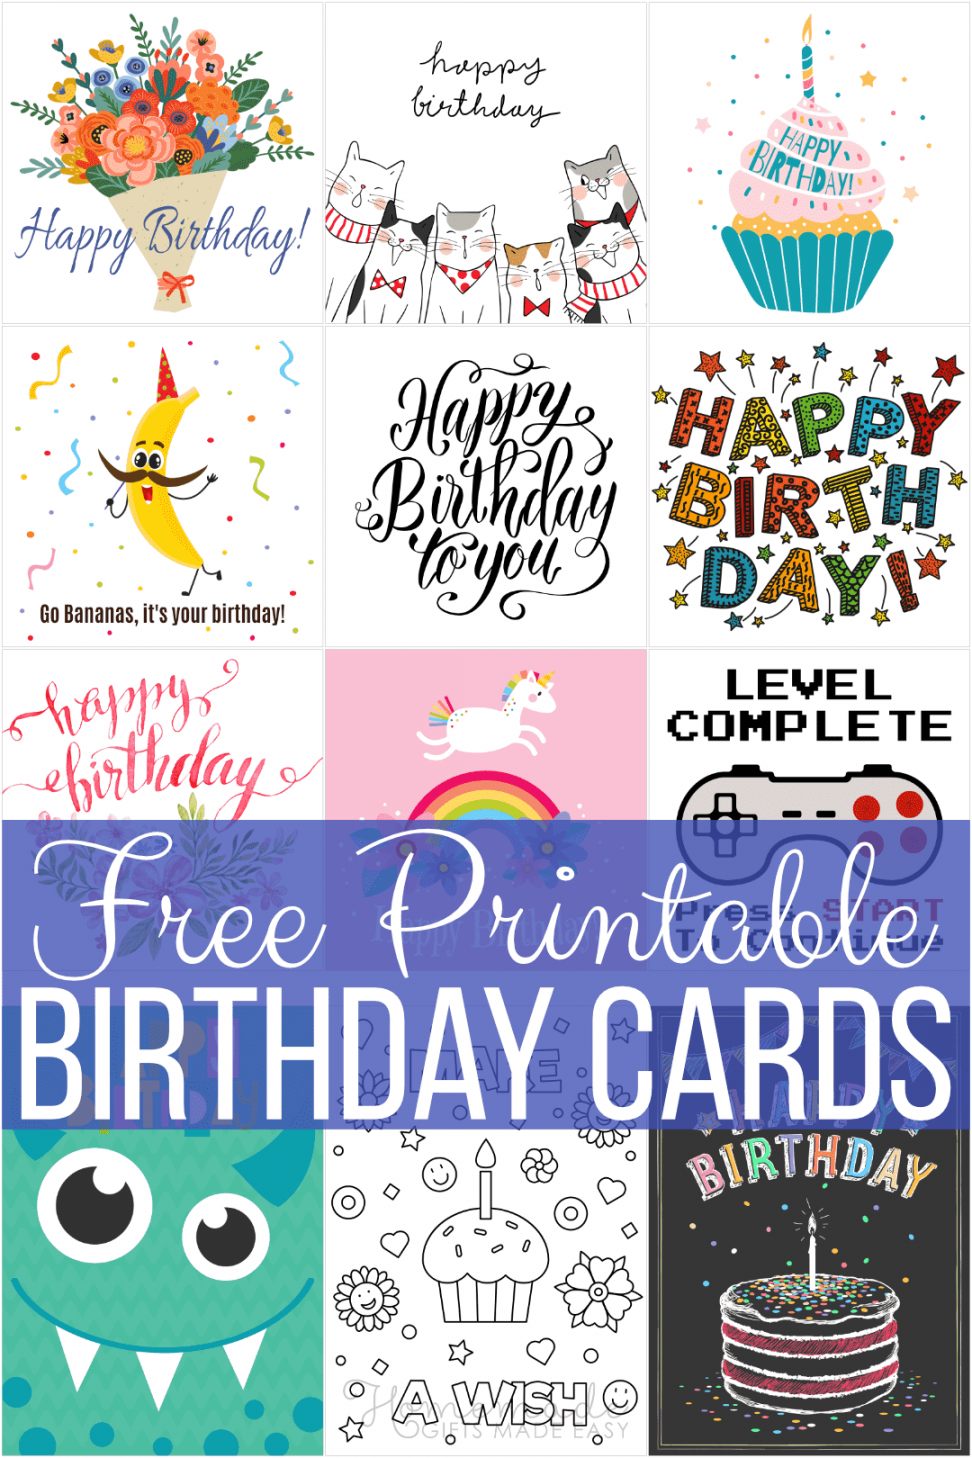 Printable Birthday Cards Free - Printable - Free Printable Birthday Cards for Everyone